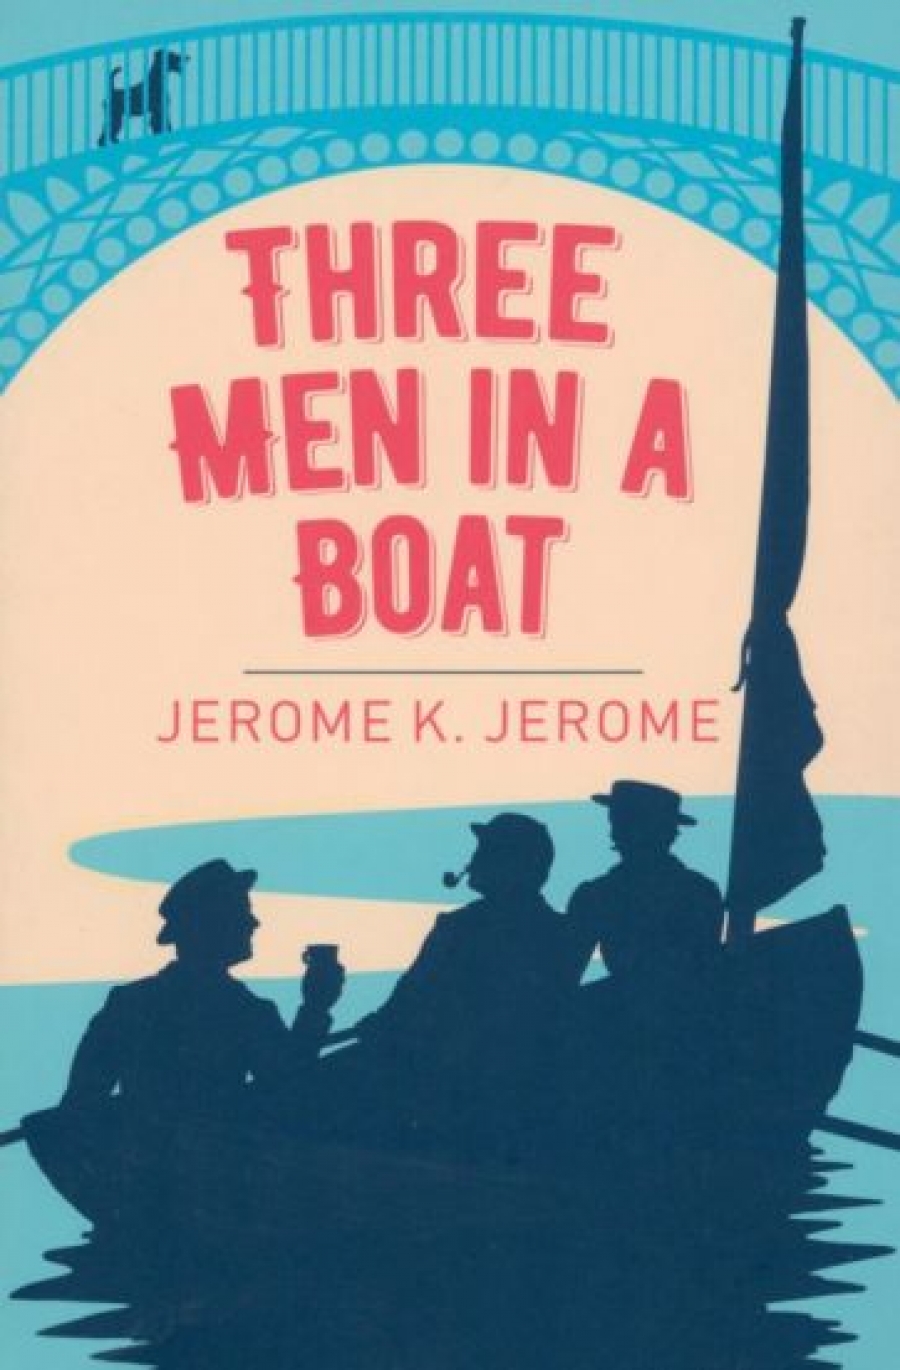 Jerome Jerome K. Three Men in a Boat 